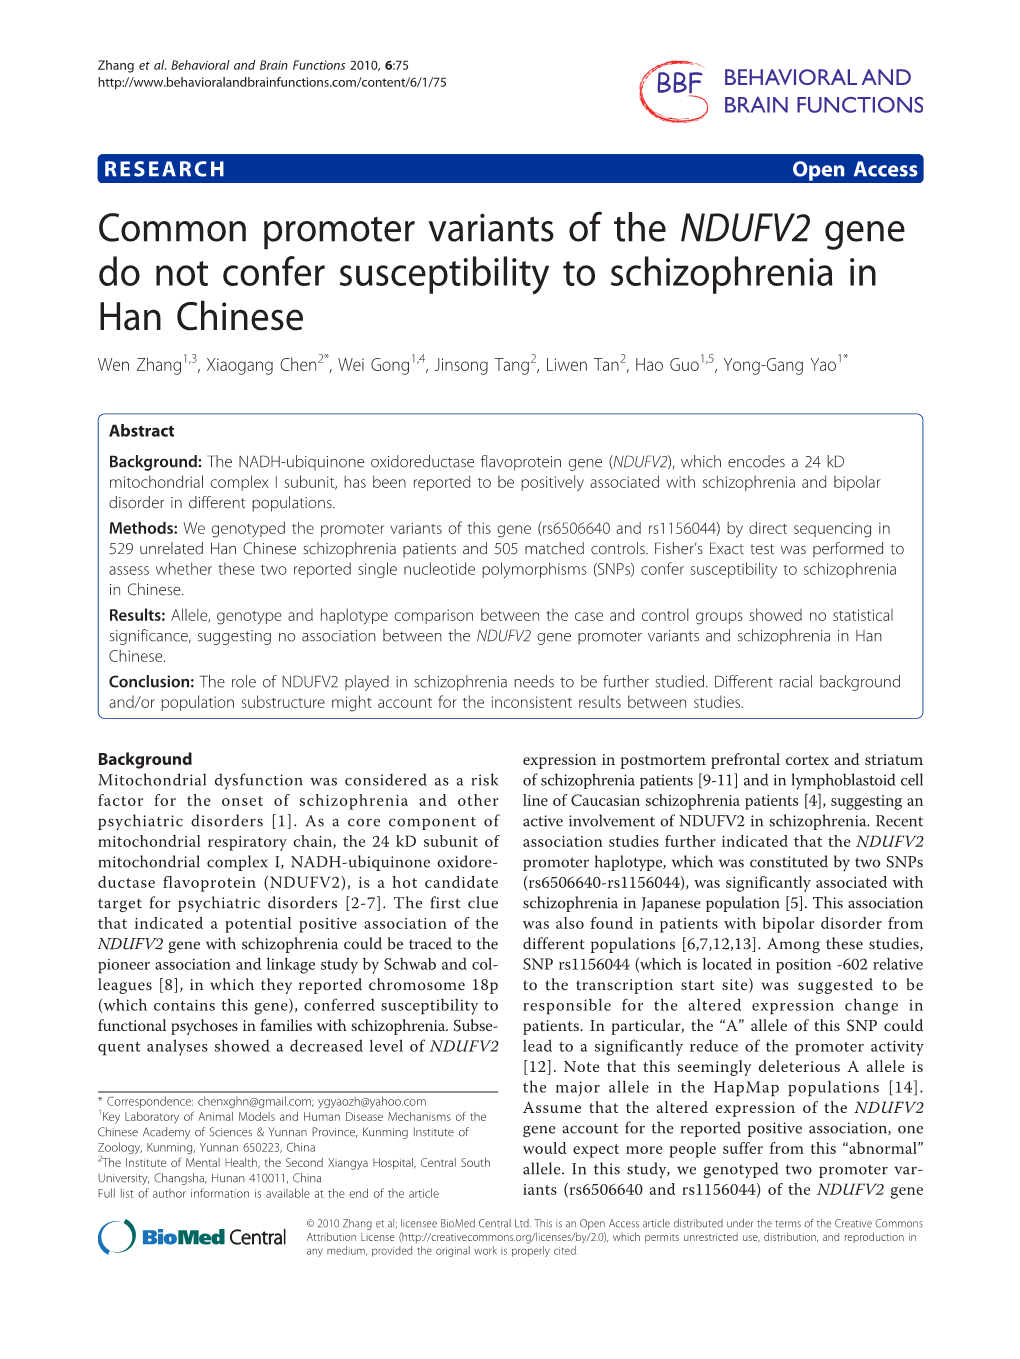 Common Promoter Variants of the NDUFV2 Gene Do Not Confer